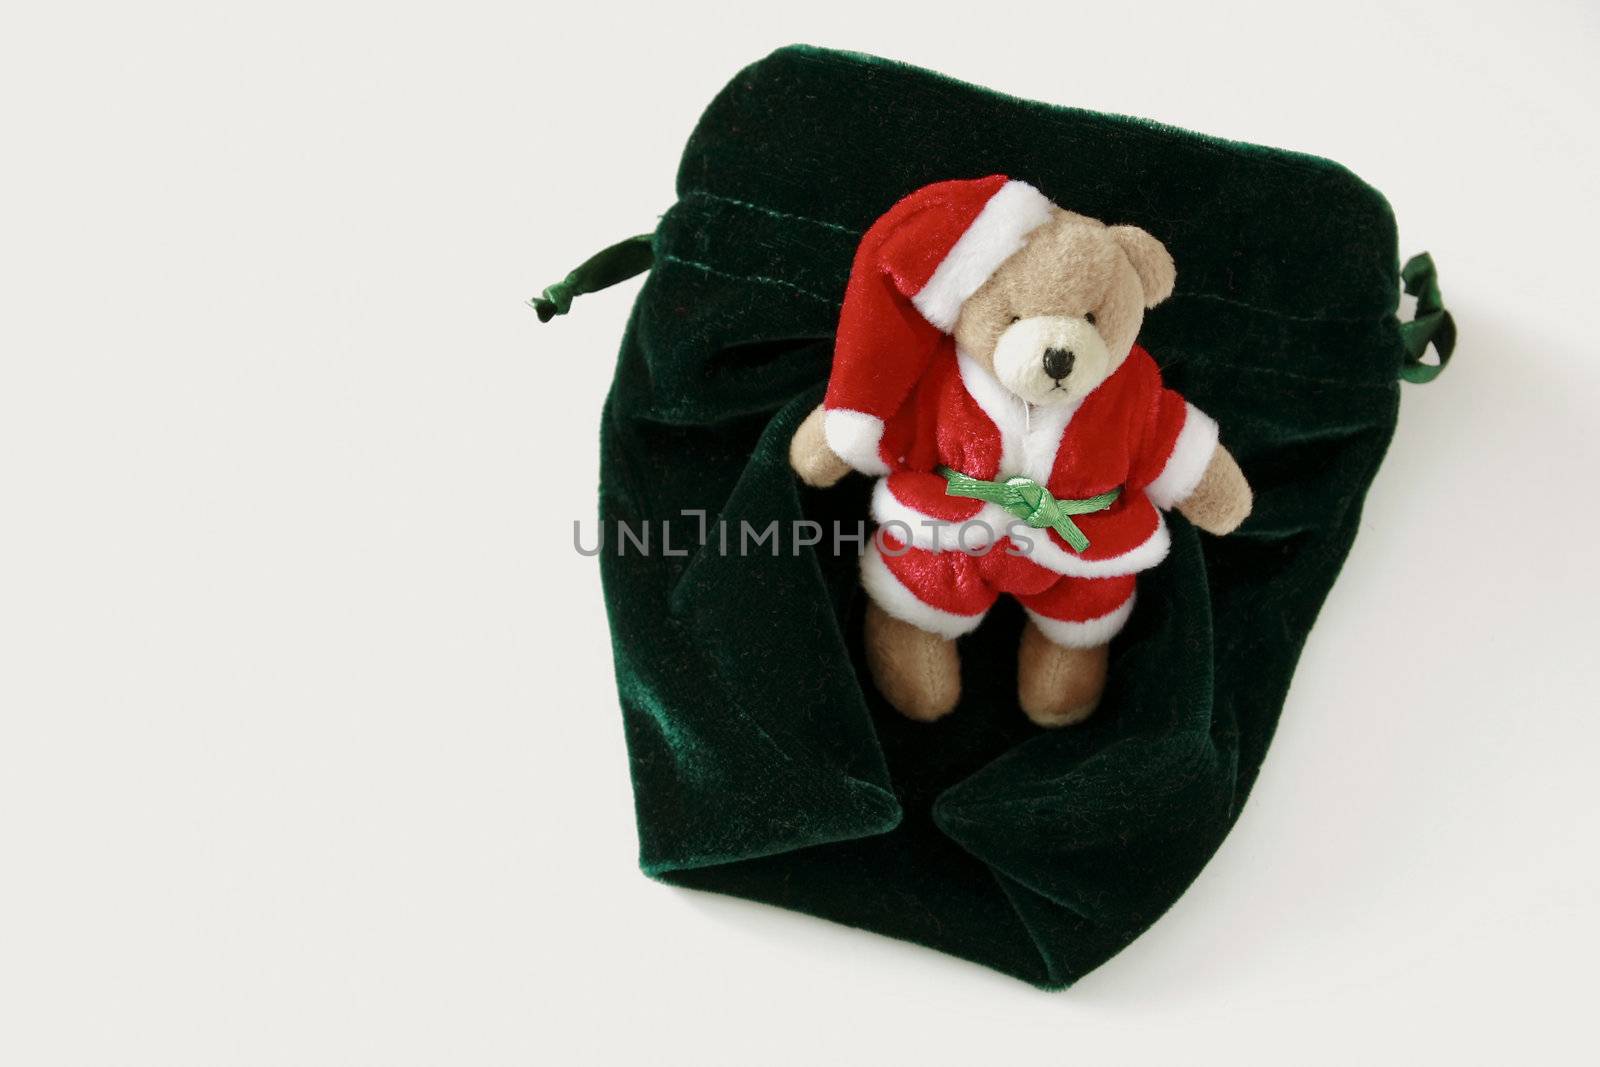 small teddy santa on a plush velvet green purse over a white background